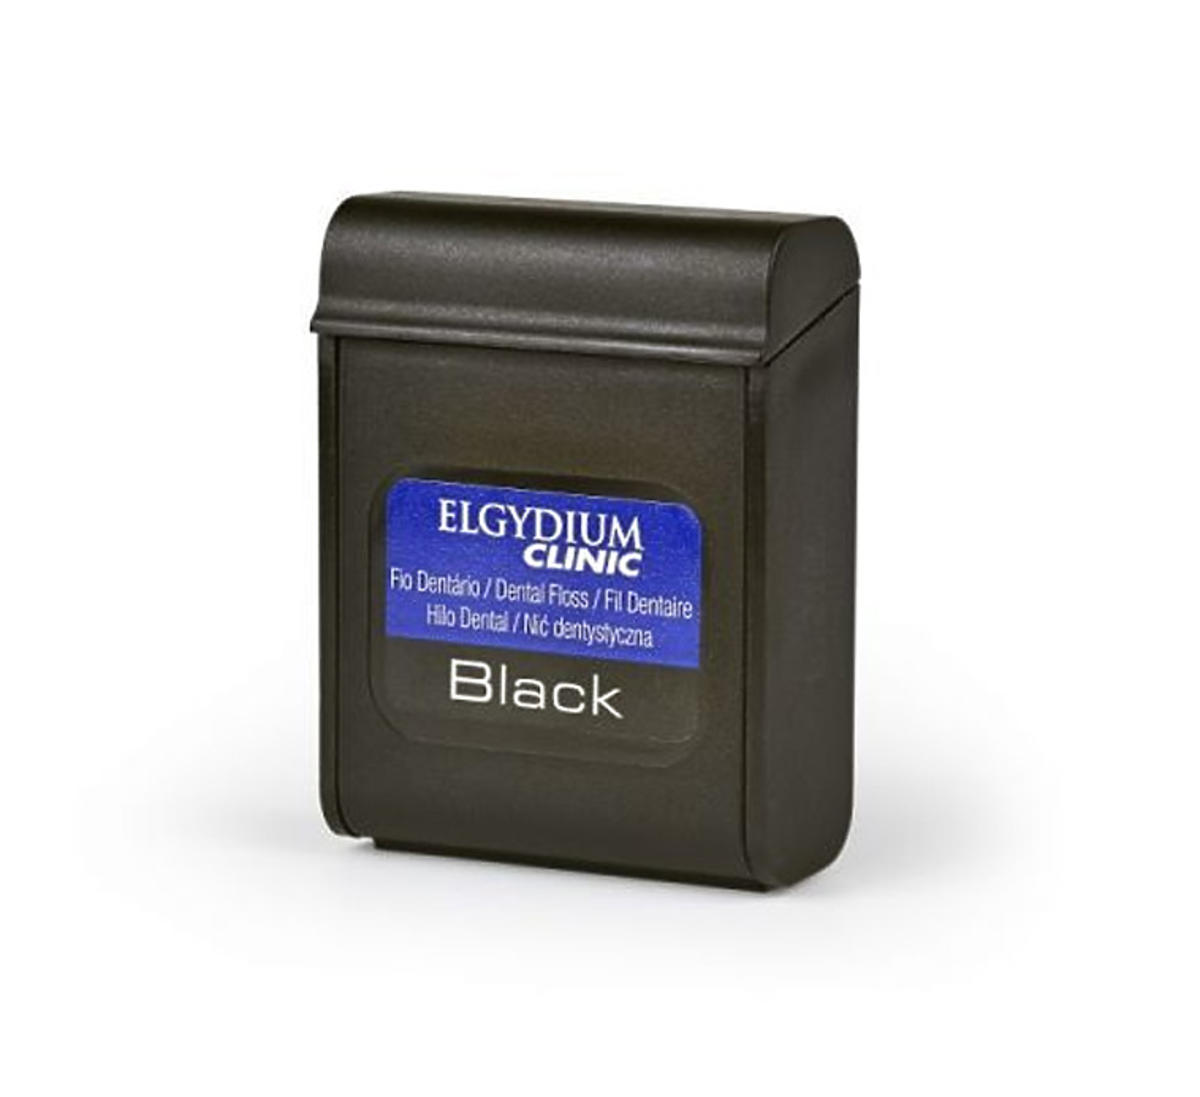 Elgydium Clinic Dental Flos Black nić dentystyczna czarna, 50 m